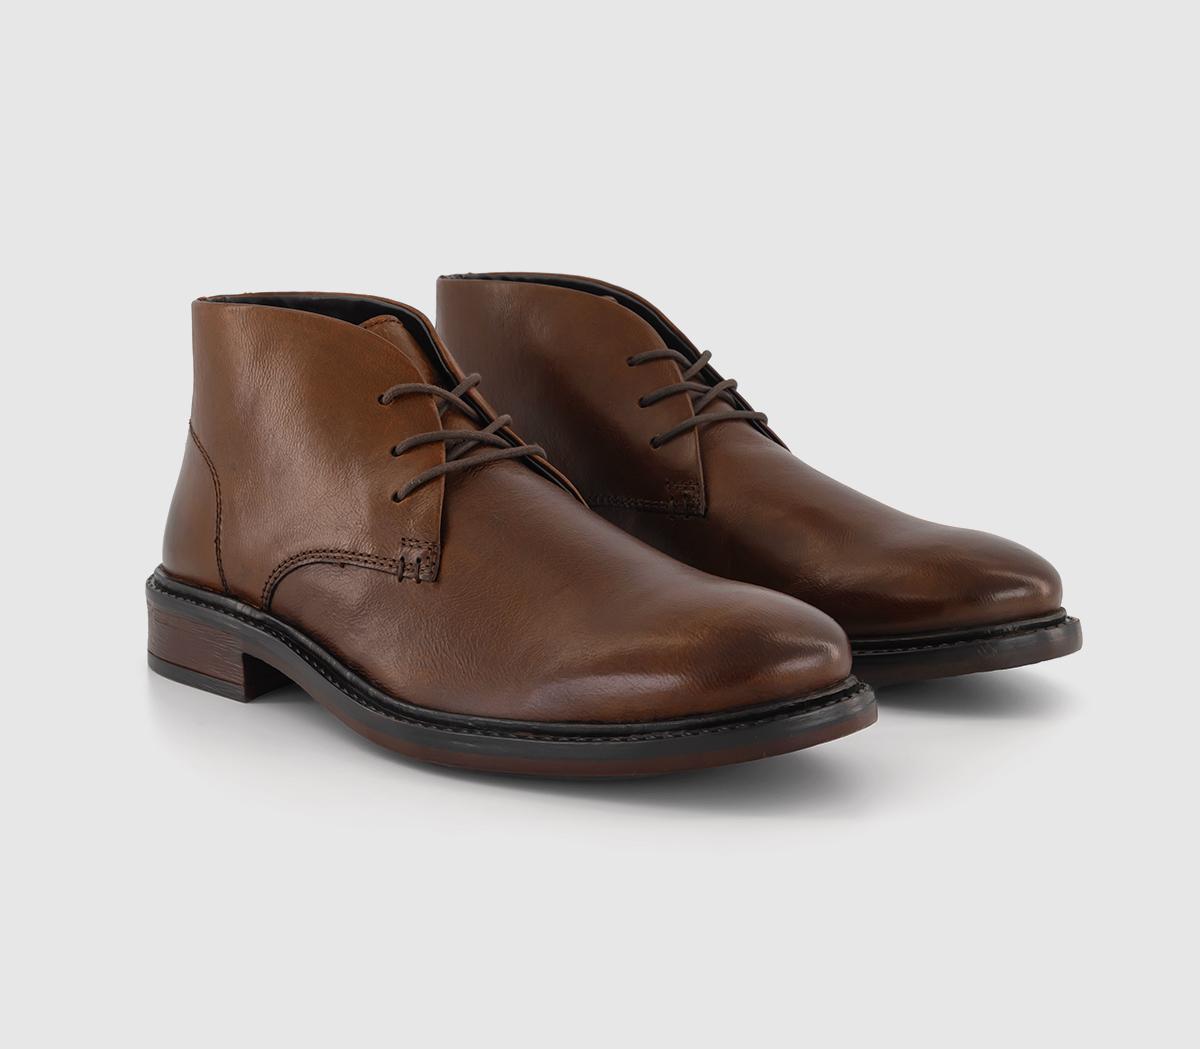 OFFICE Mens Burlington Chukka Boots Brown Leather, 11